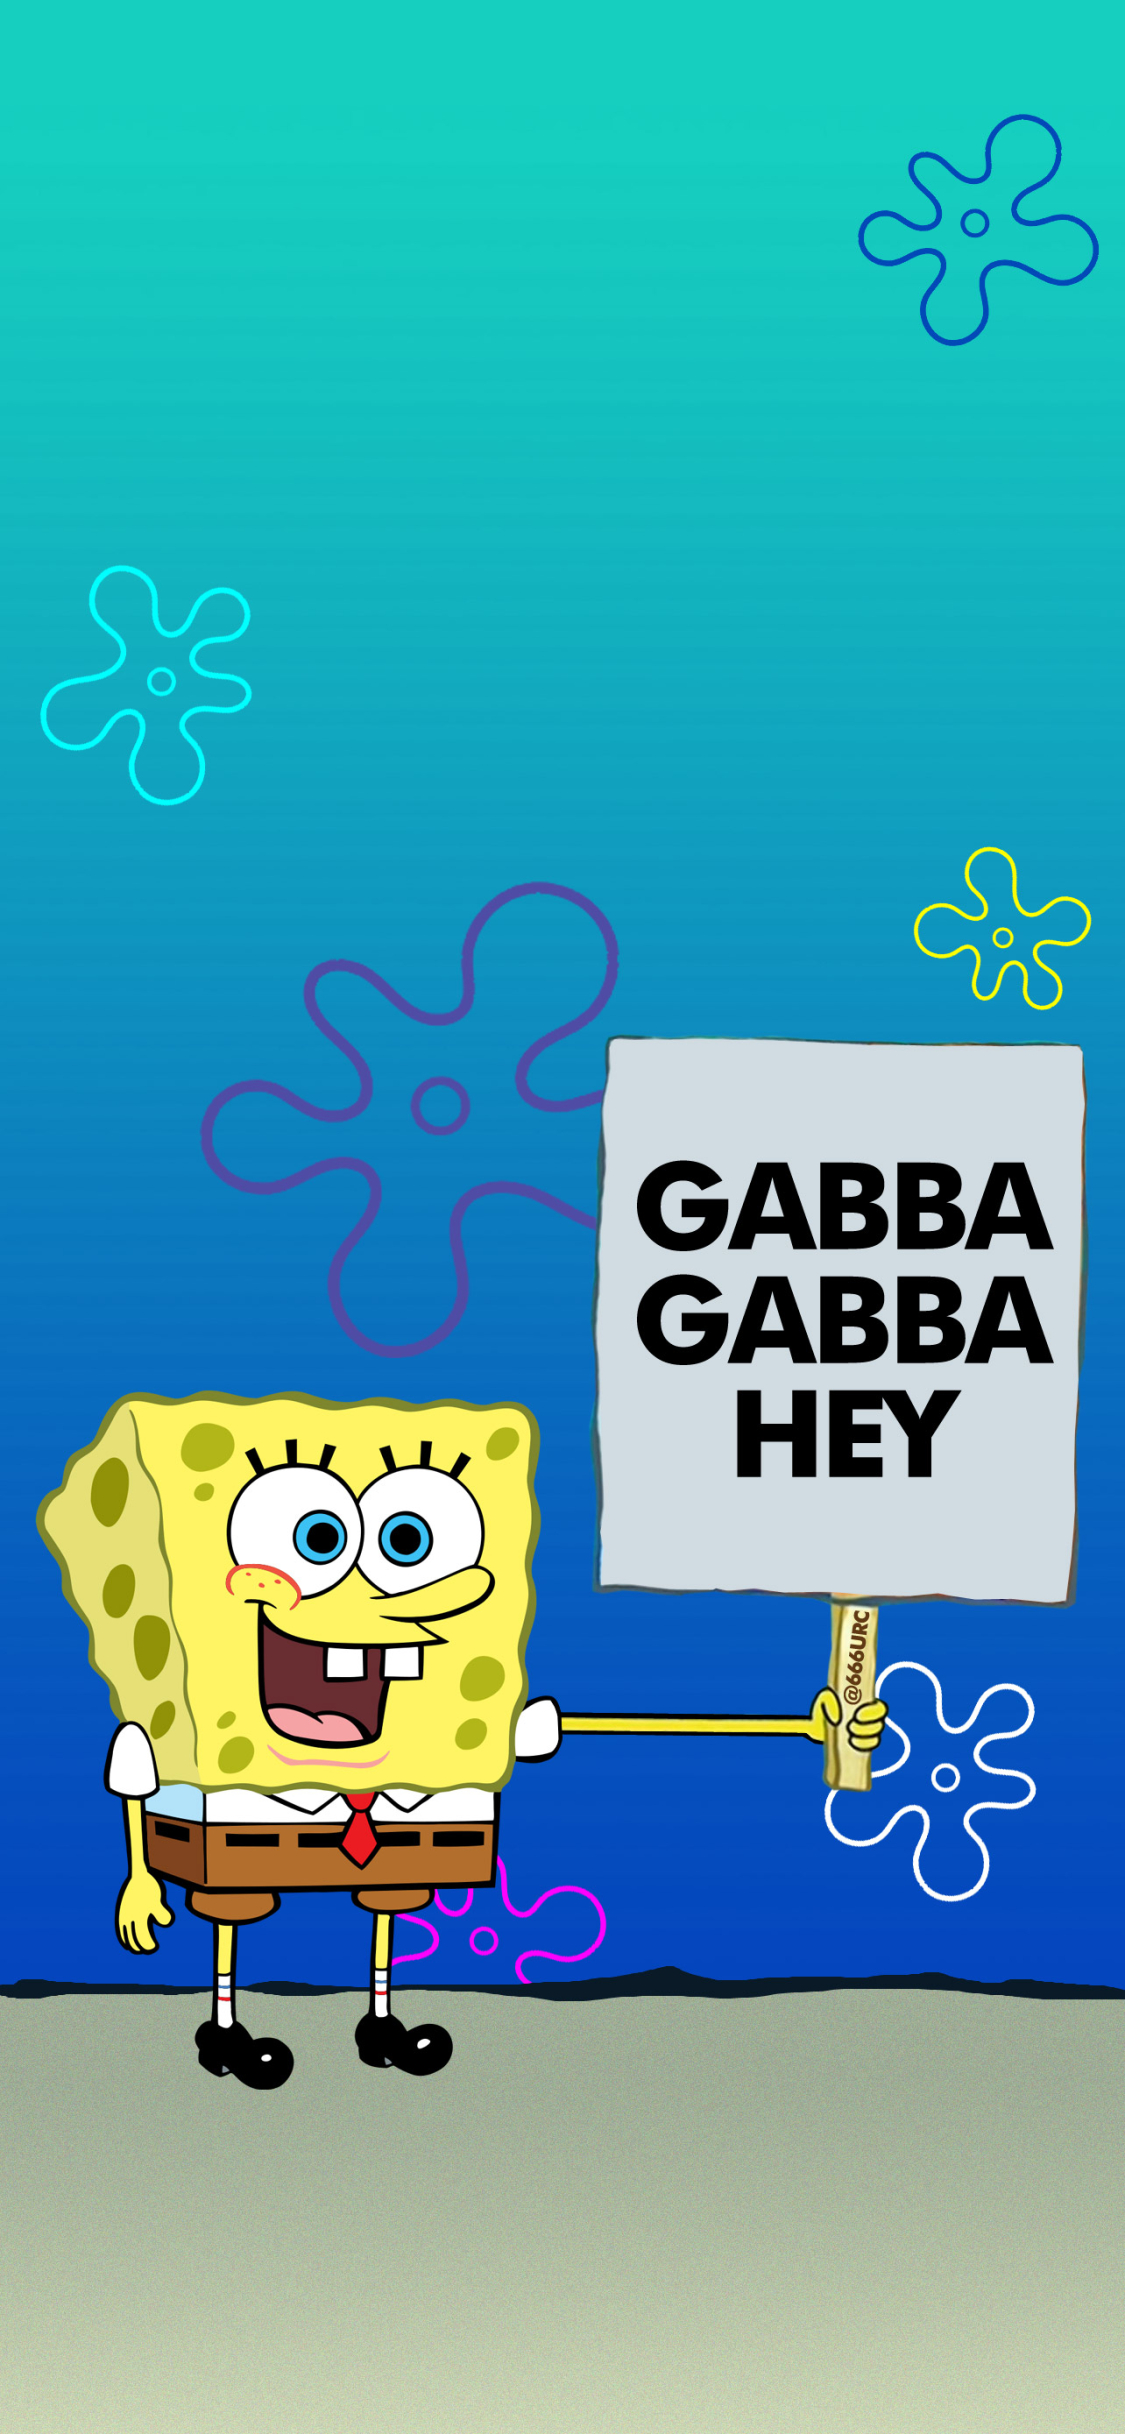 phone wallpaper displaying spongebob sign // gabba gabba hey